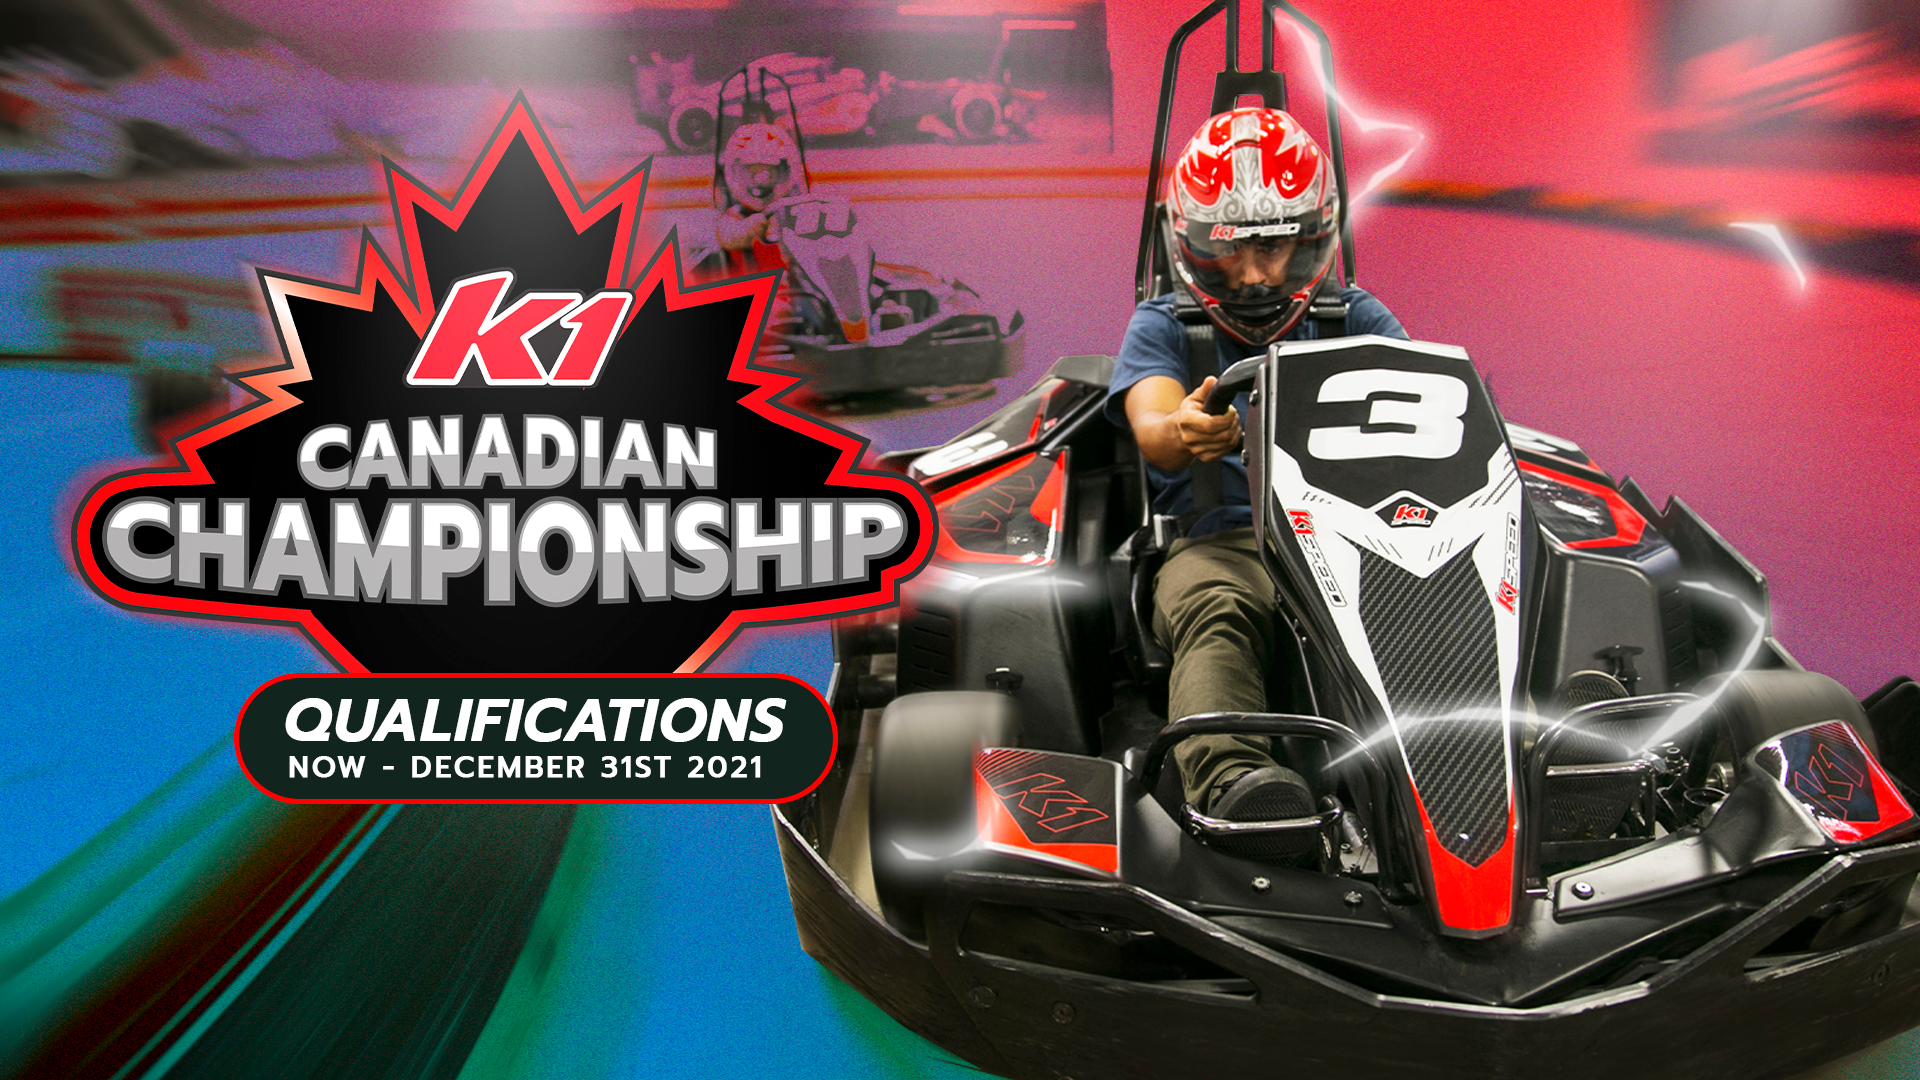 Canadian Championship go kart race